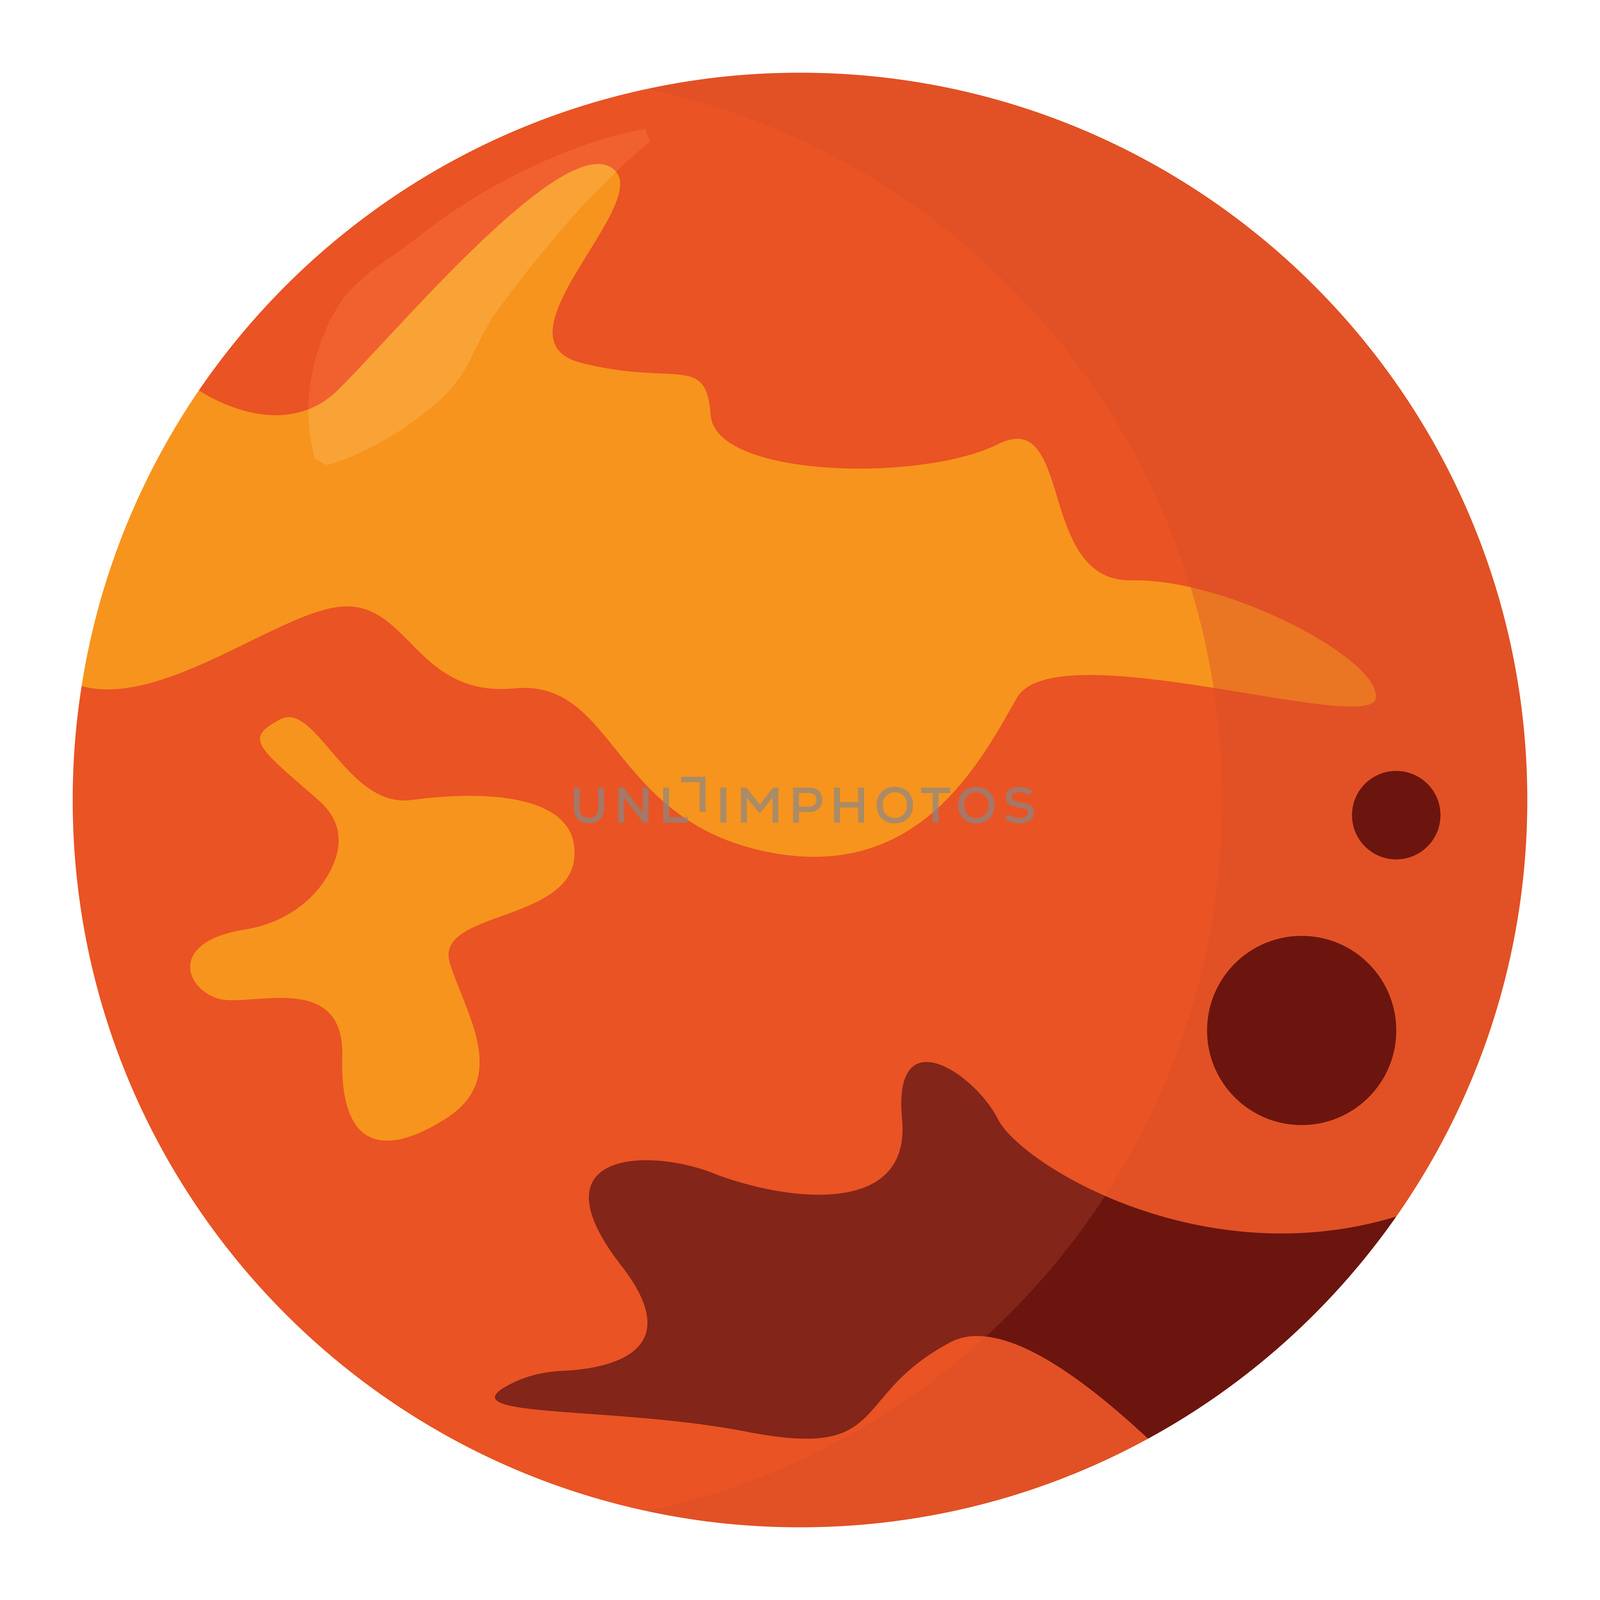 Red planet Mars , illustration, vector on white background